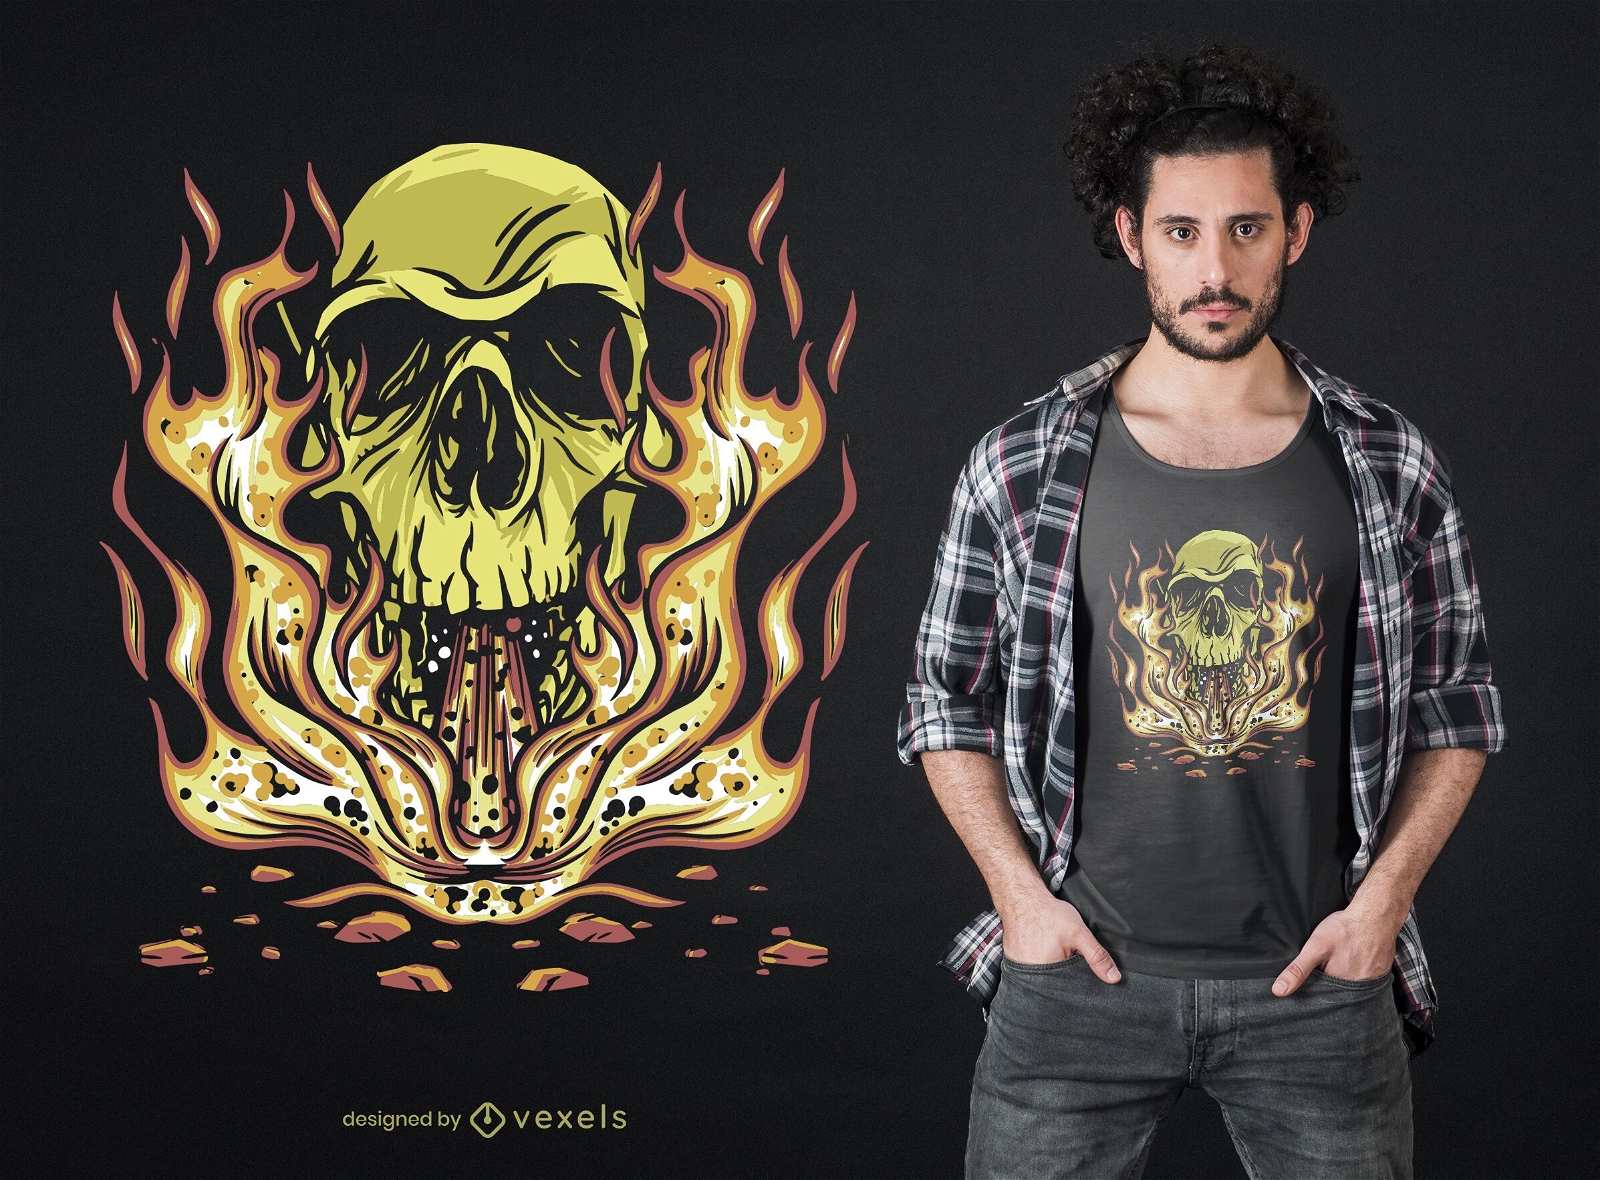 Skull flames t-shirt design